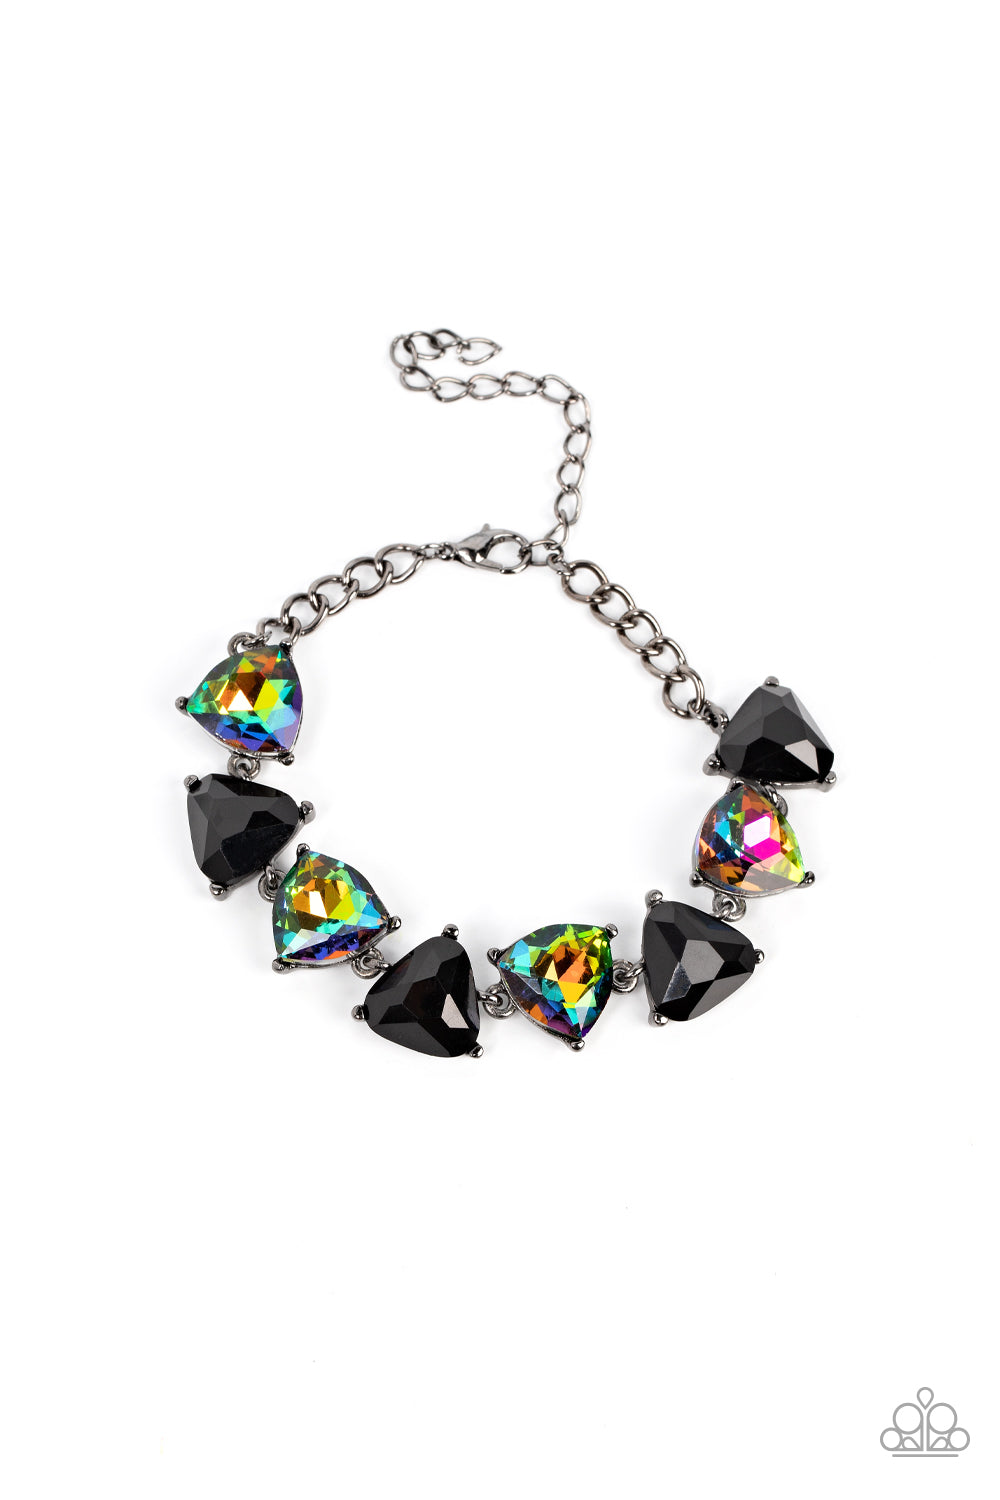 Triangular cut black beads and oil spill gems alternate around the wrist